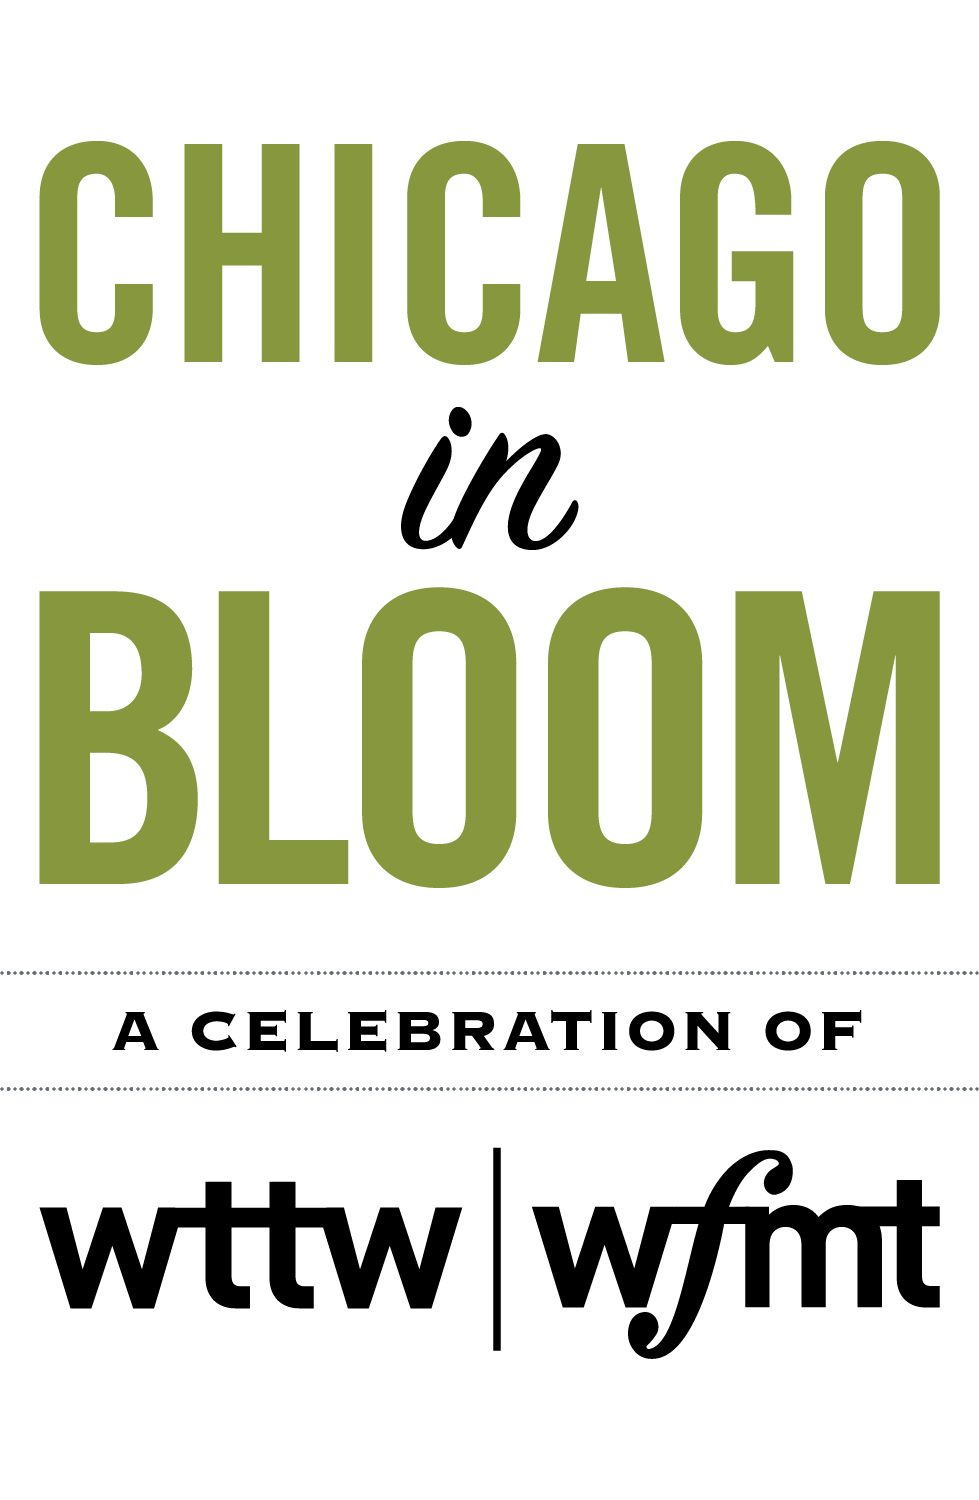 Chicago in Bloom logo